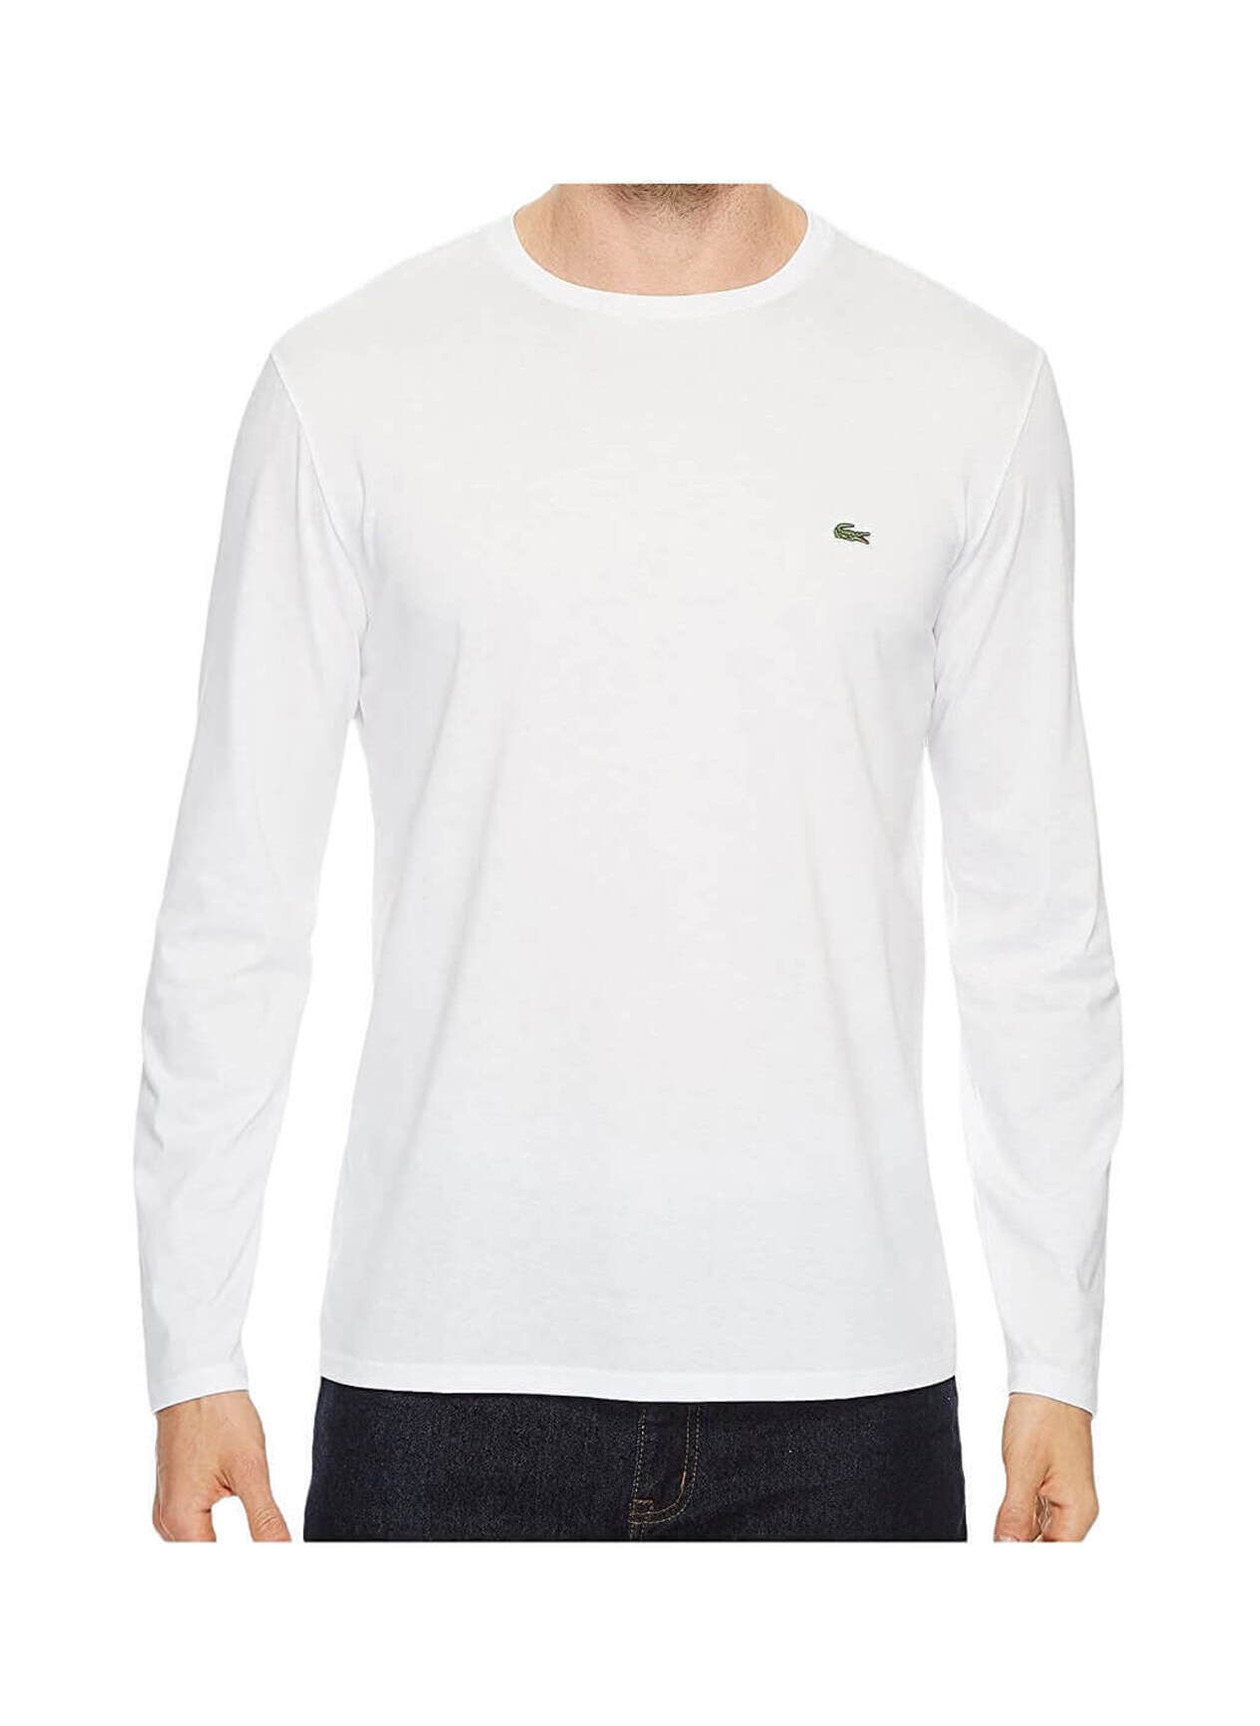 Lacoste Men's White Pima Crewneck Long-Sleeve T-Shirt